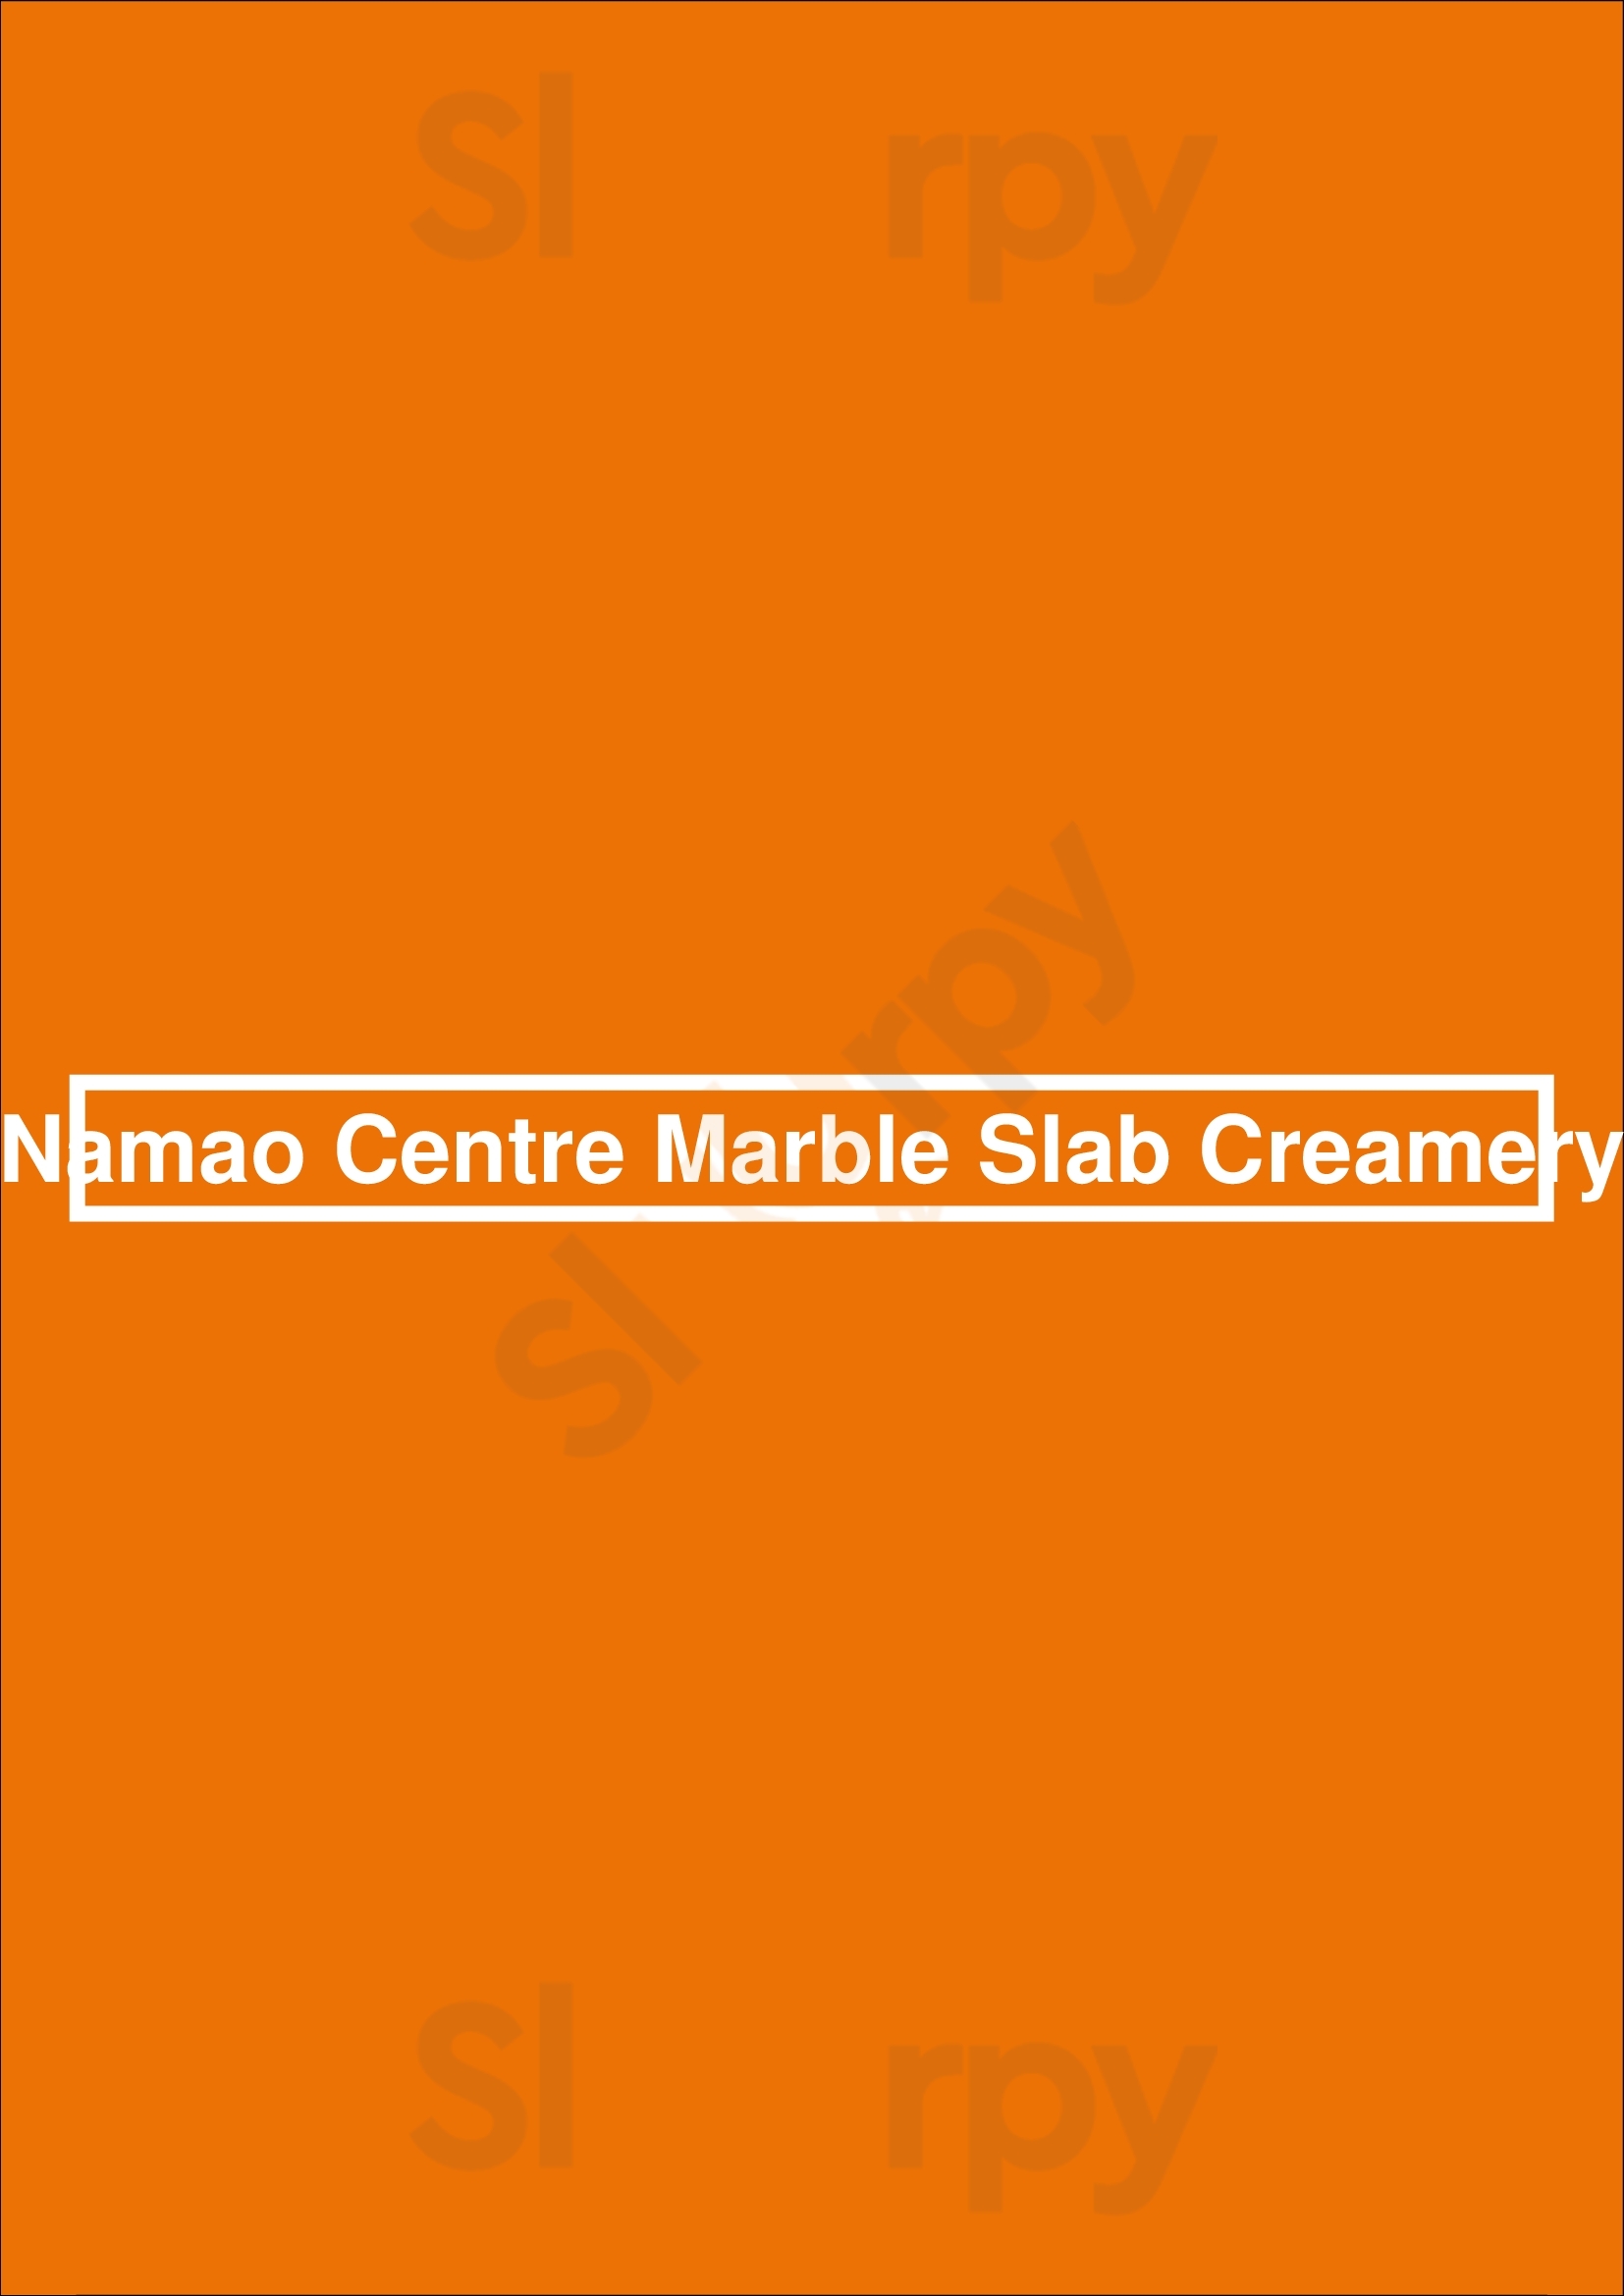 Namao Centre Marble Slab Creamery Edmonton Menu - 1